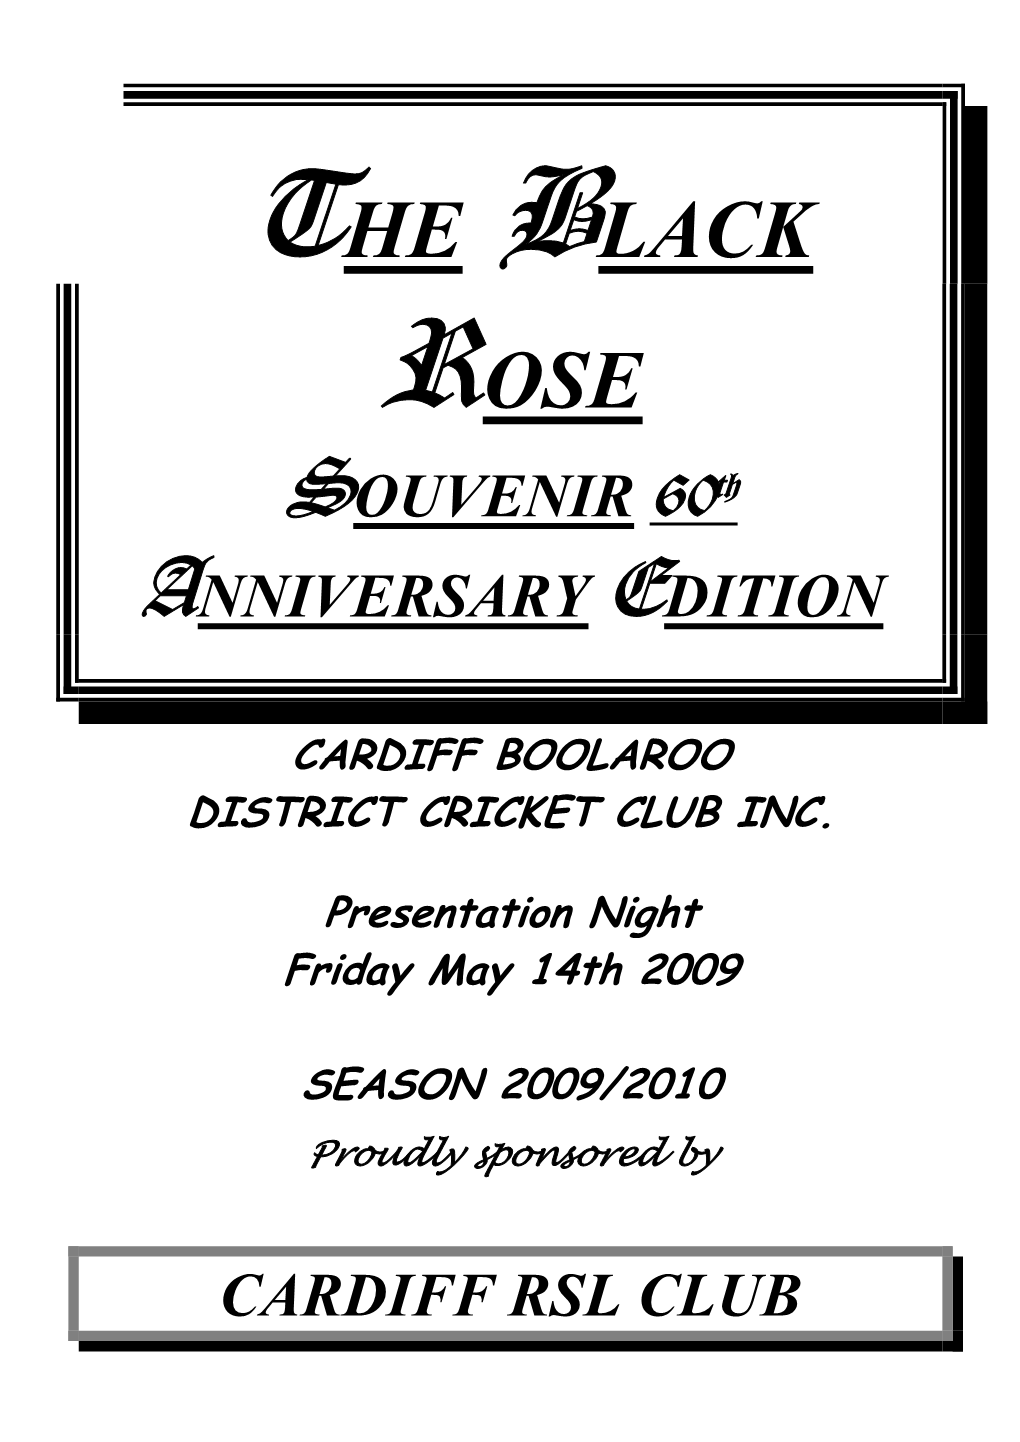 THE BLACK ROSE SOUVENIR 60Th ANNIVERSARY EDITION